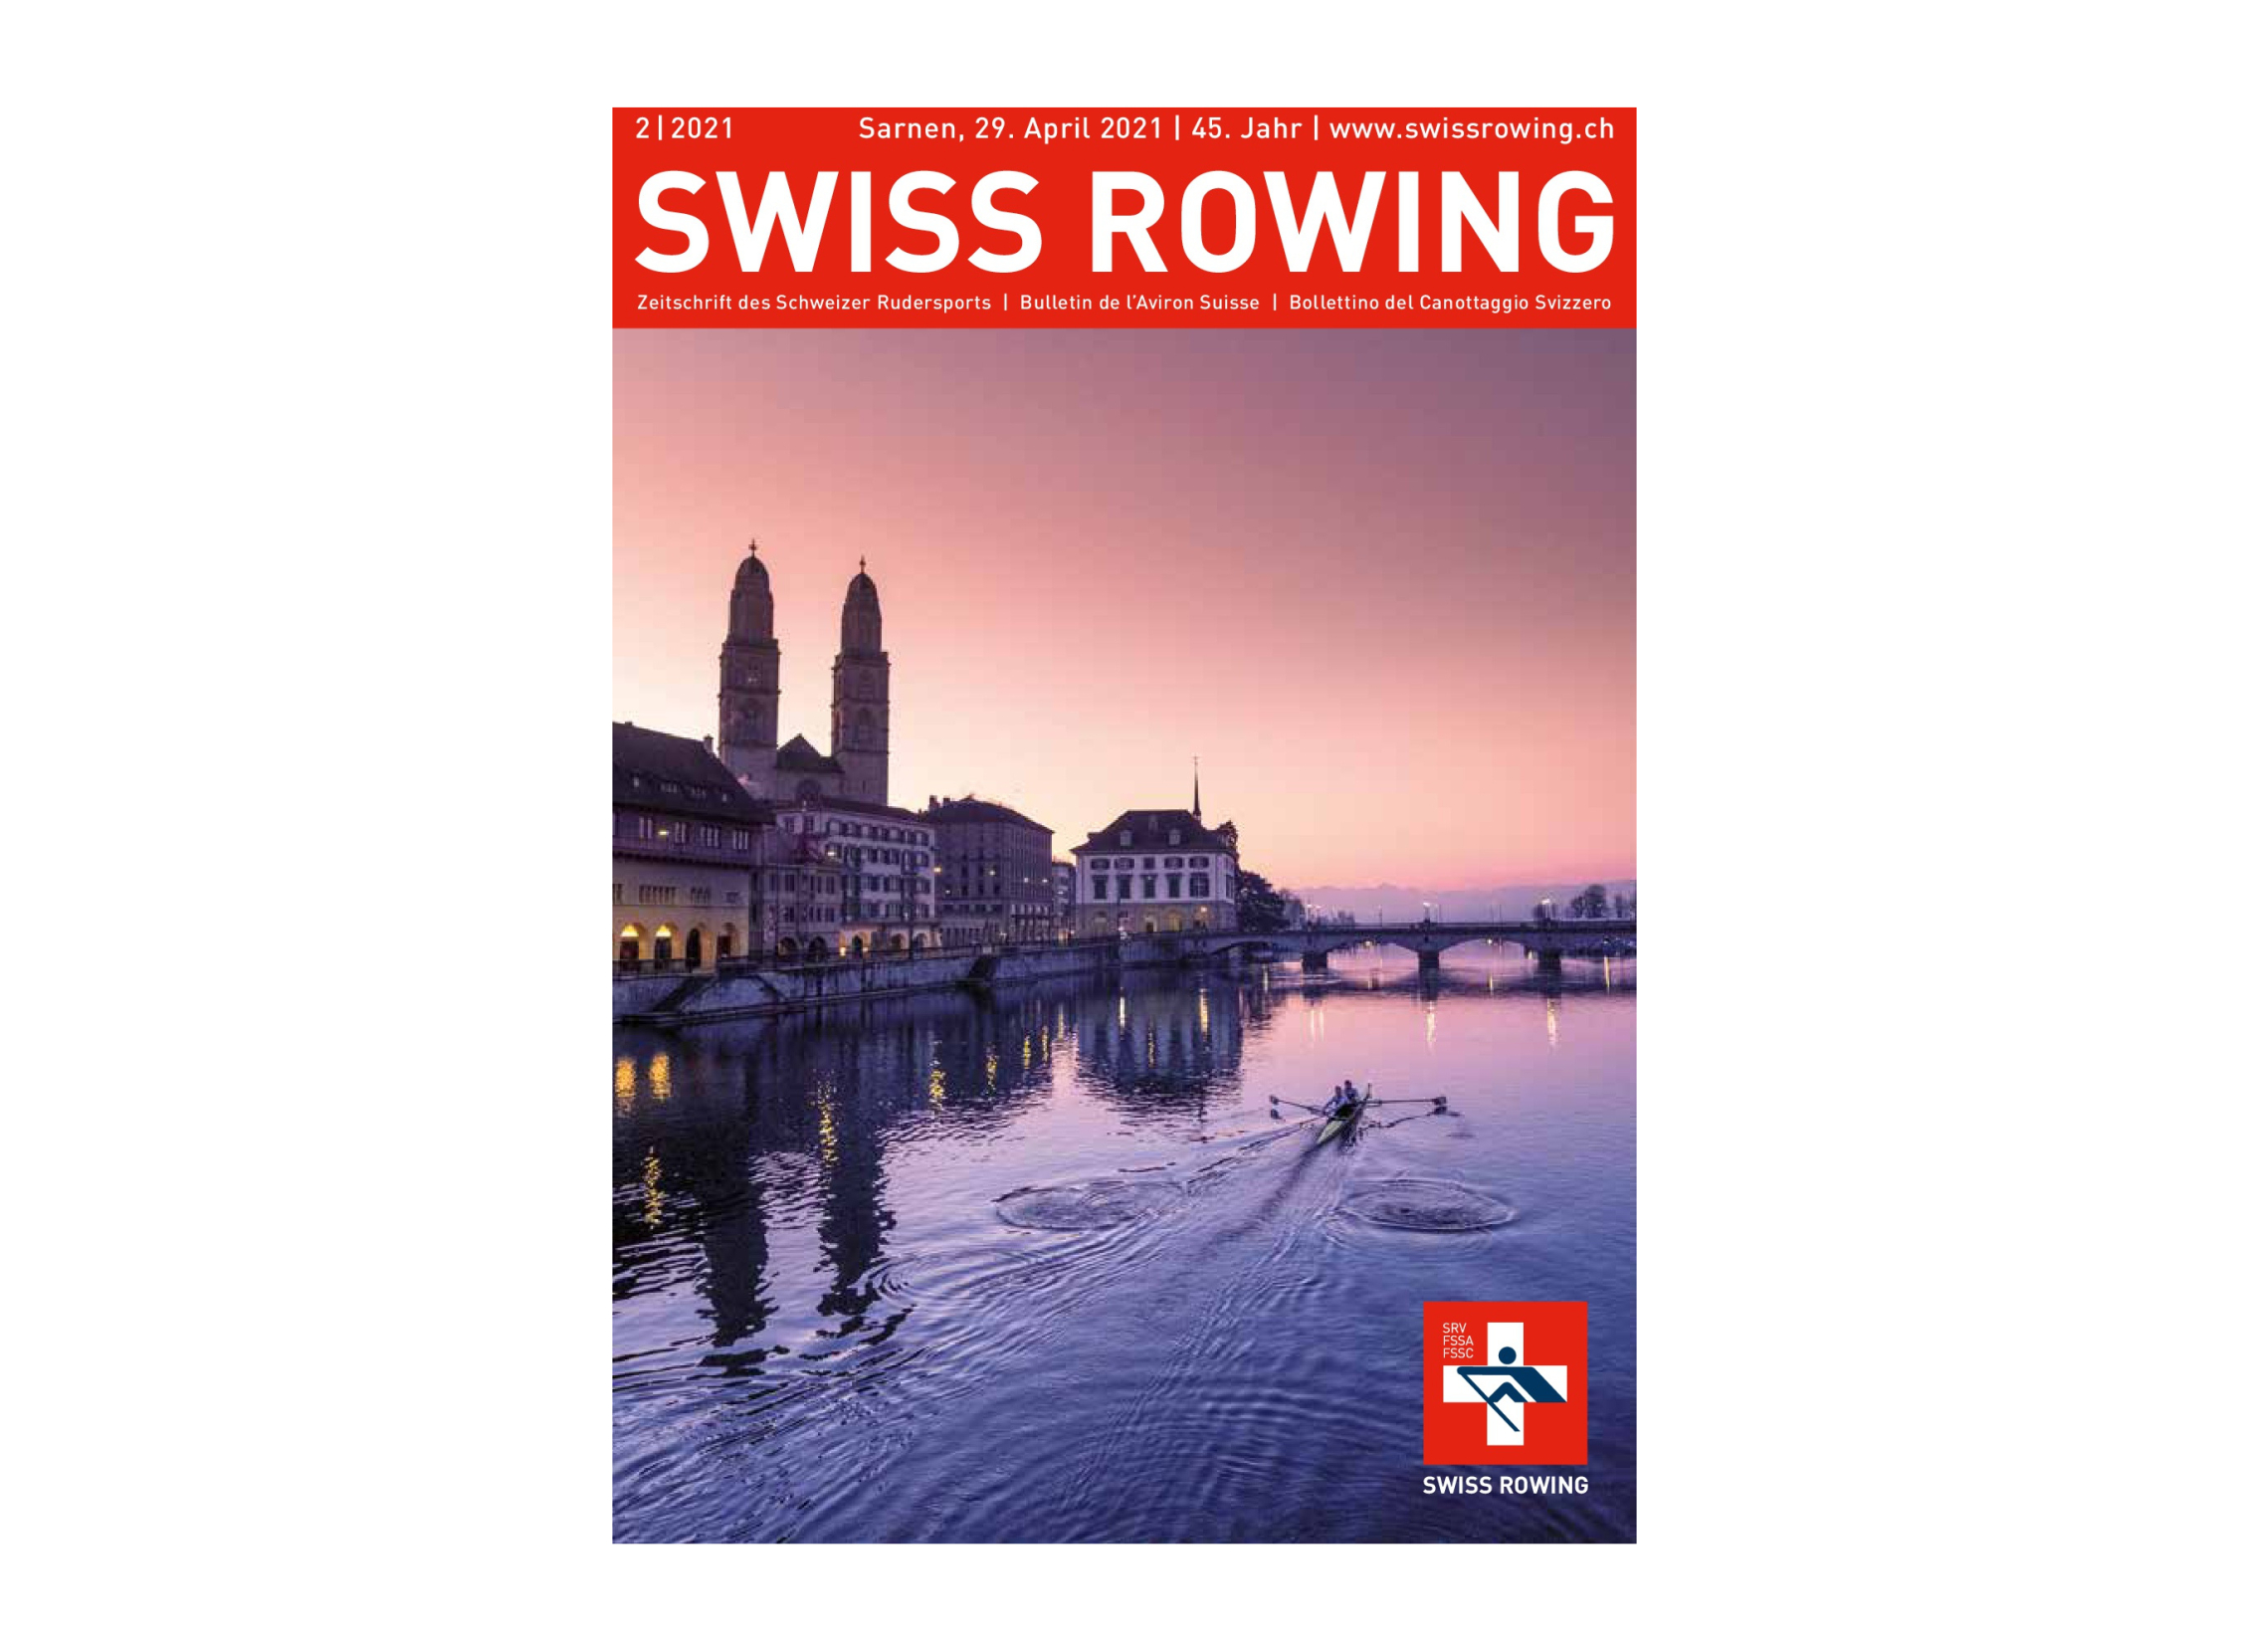 Standardbild News Swiss Rowing 2/21